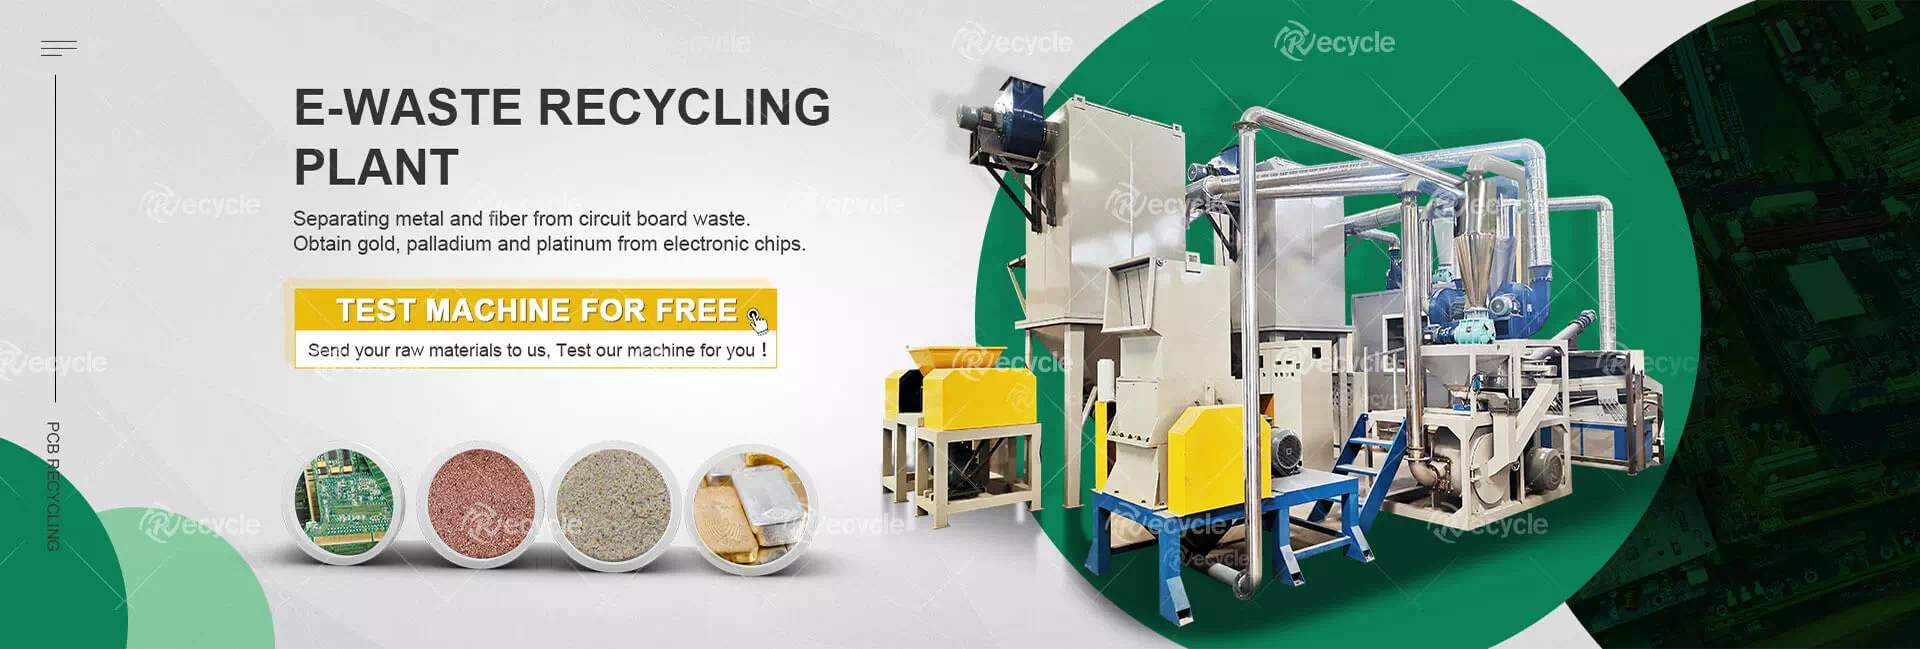 E-Waste Recycling Plant